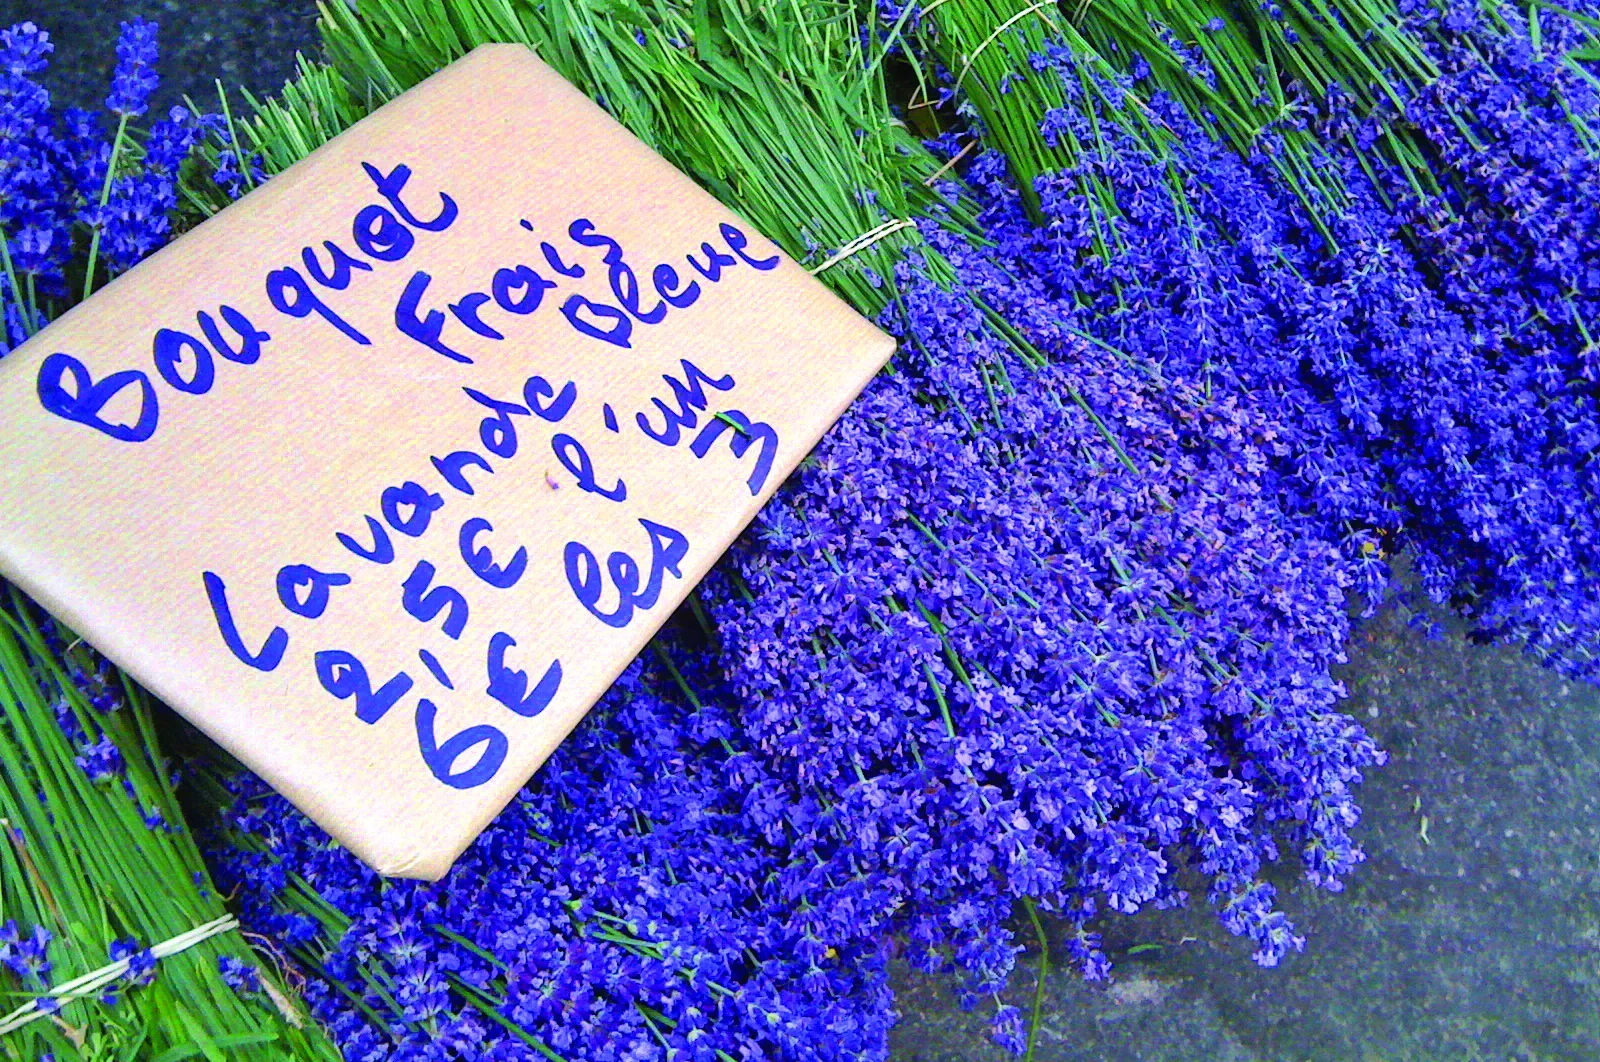 Lavender Being sold